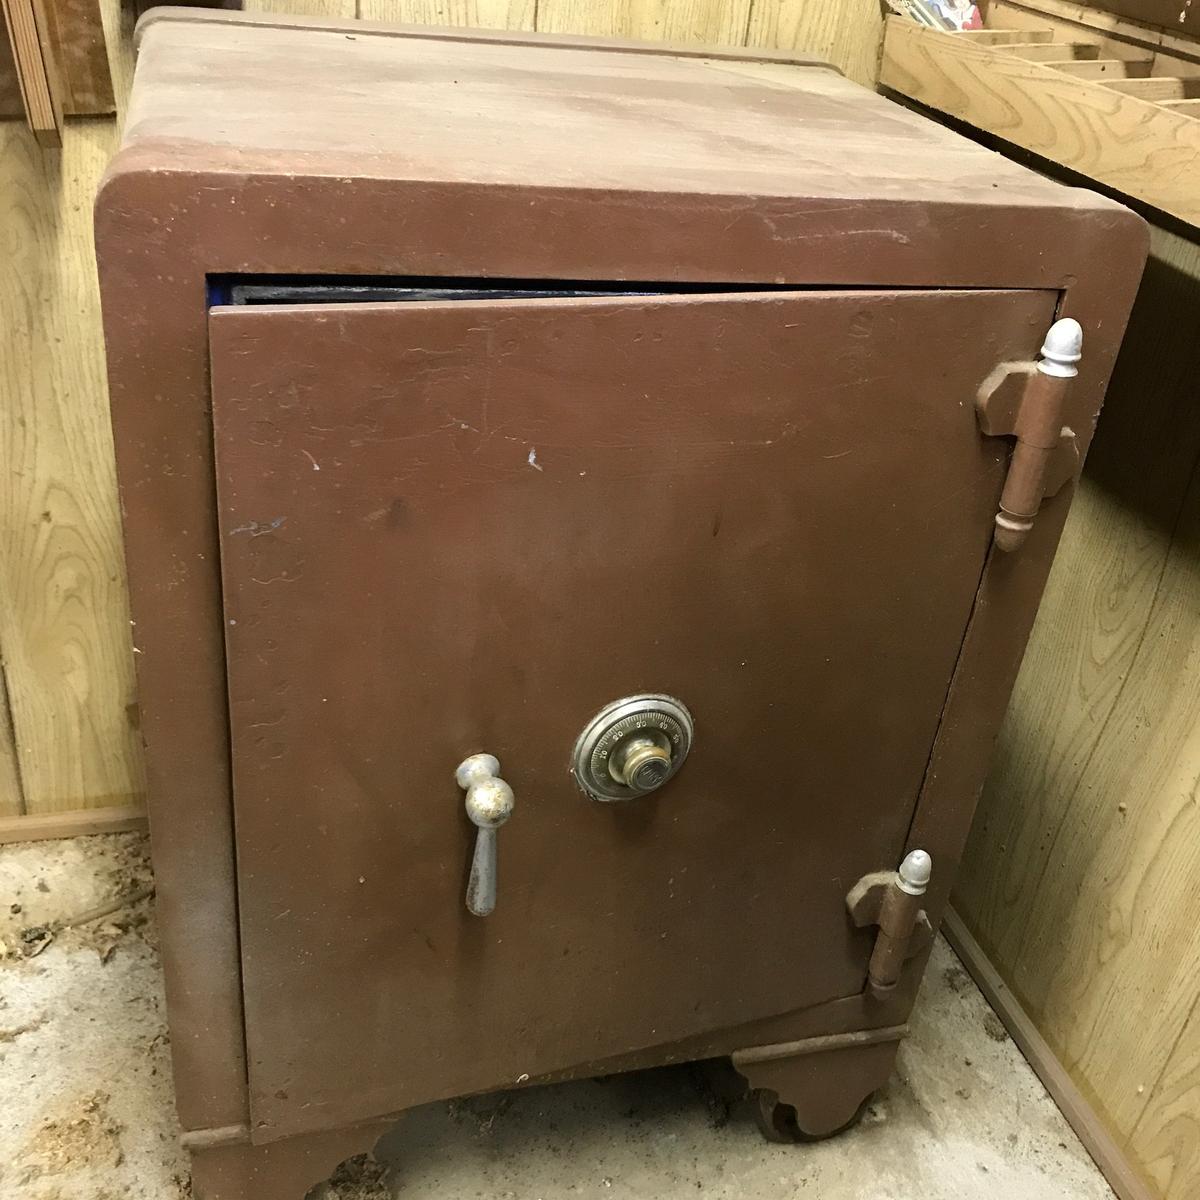 Huge Vintage Safe by Cary Safe Co. Buffalo, N,Y,